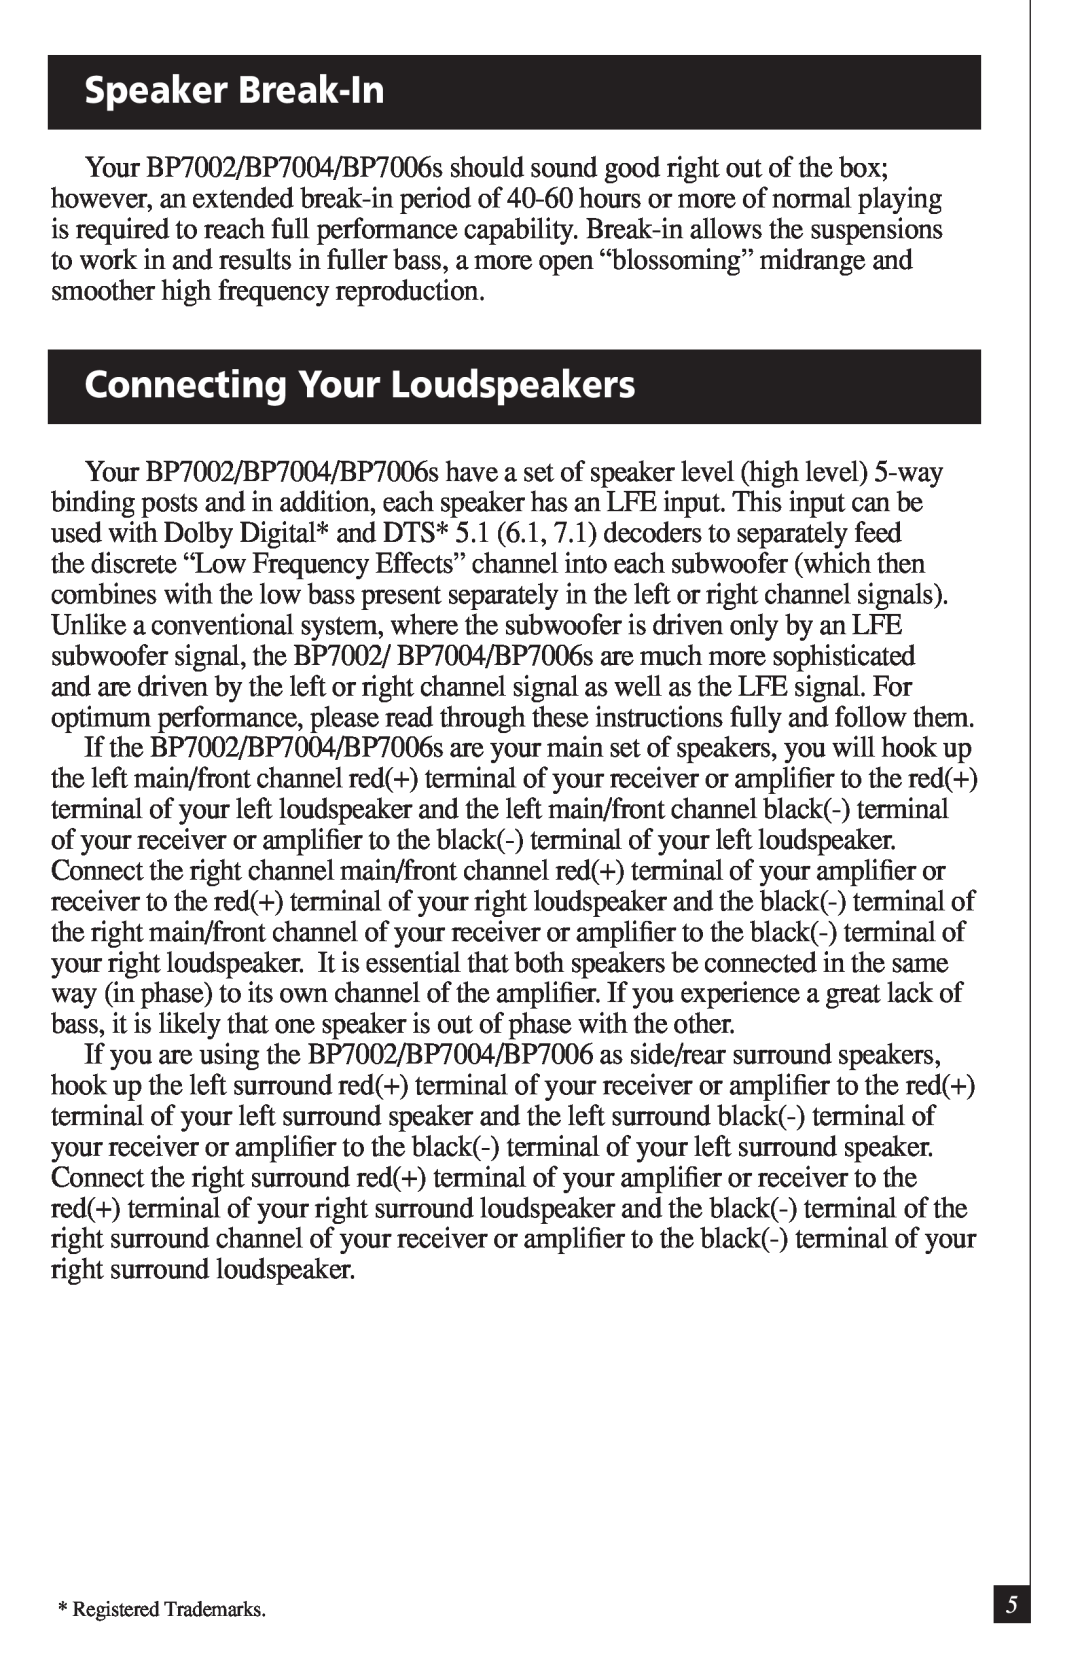 Definitive Technology BP7002, BP7004, BP7006 Speaker Break-In, Connecting Your Loudspeakers, Registered Trademarks 